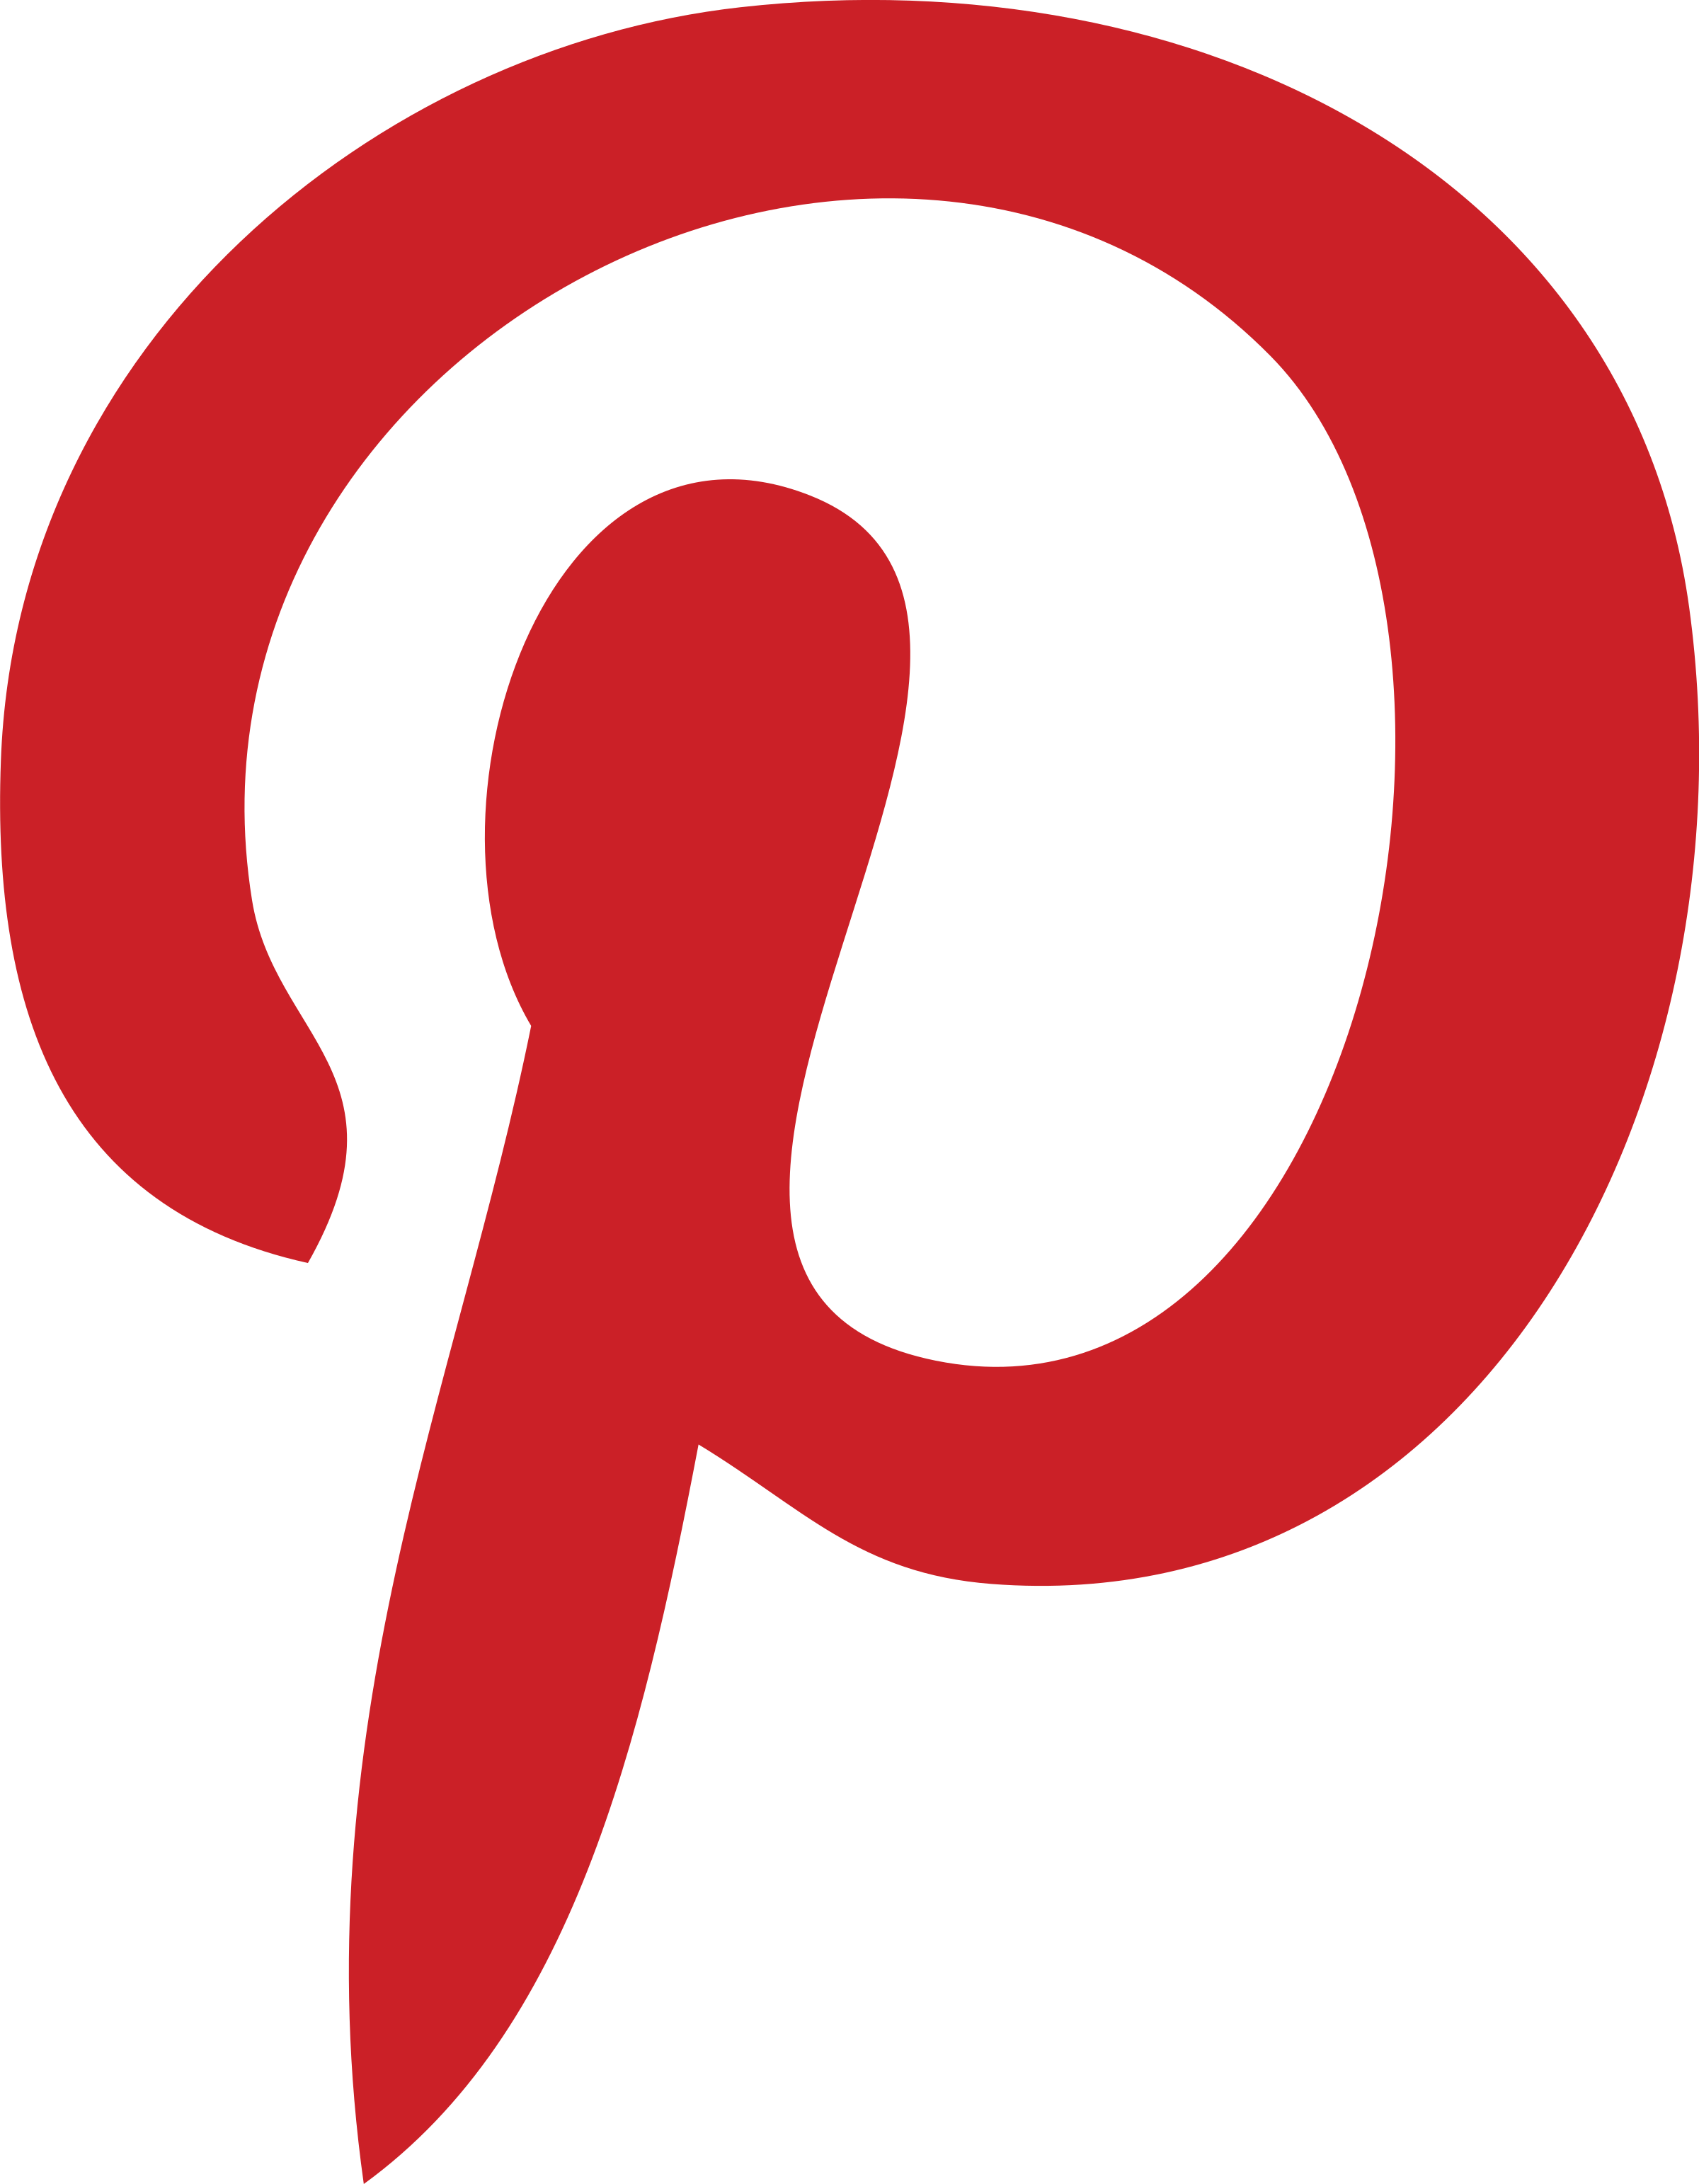 Pinetrest Logo - Pinterest 2 Logo PNG Transparent & SVG Vector - Freebie Supply